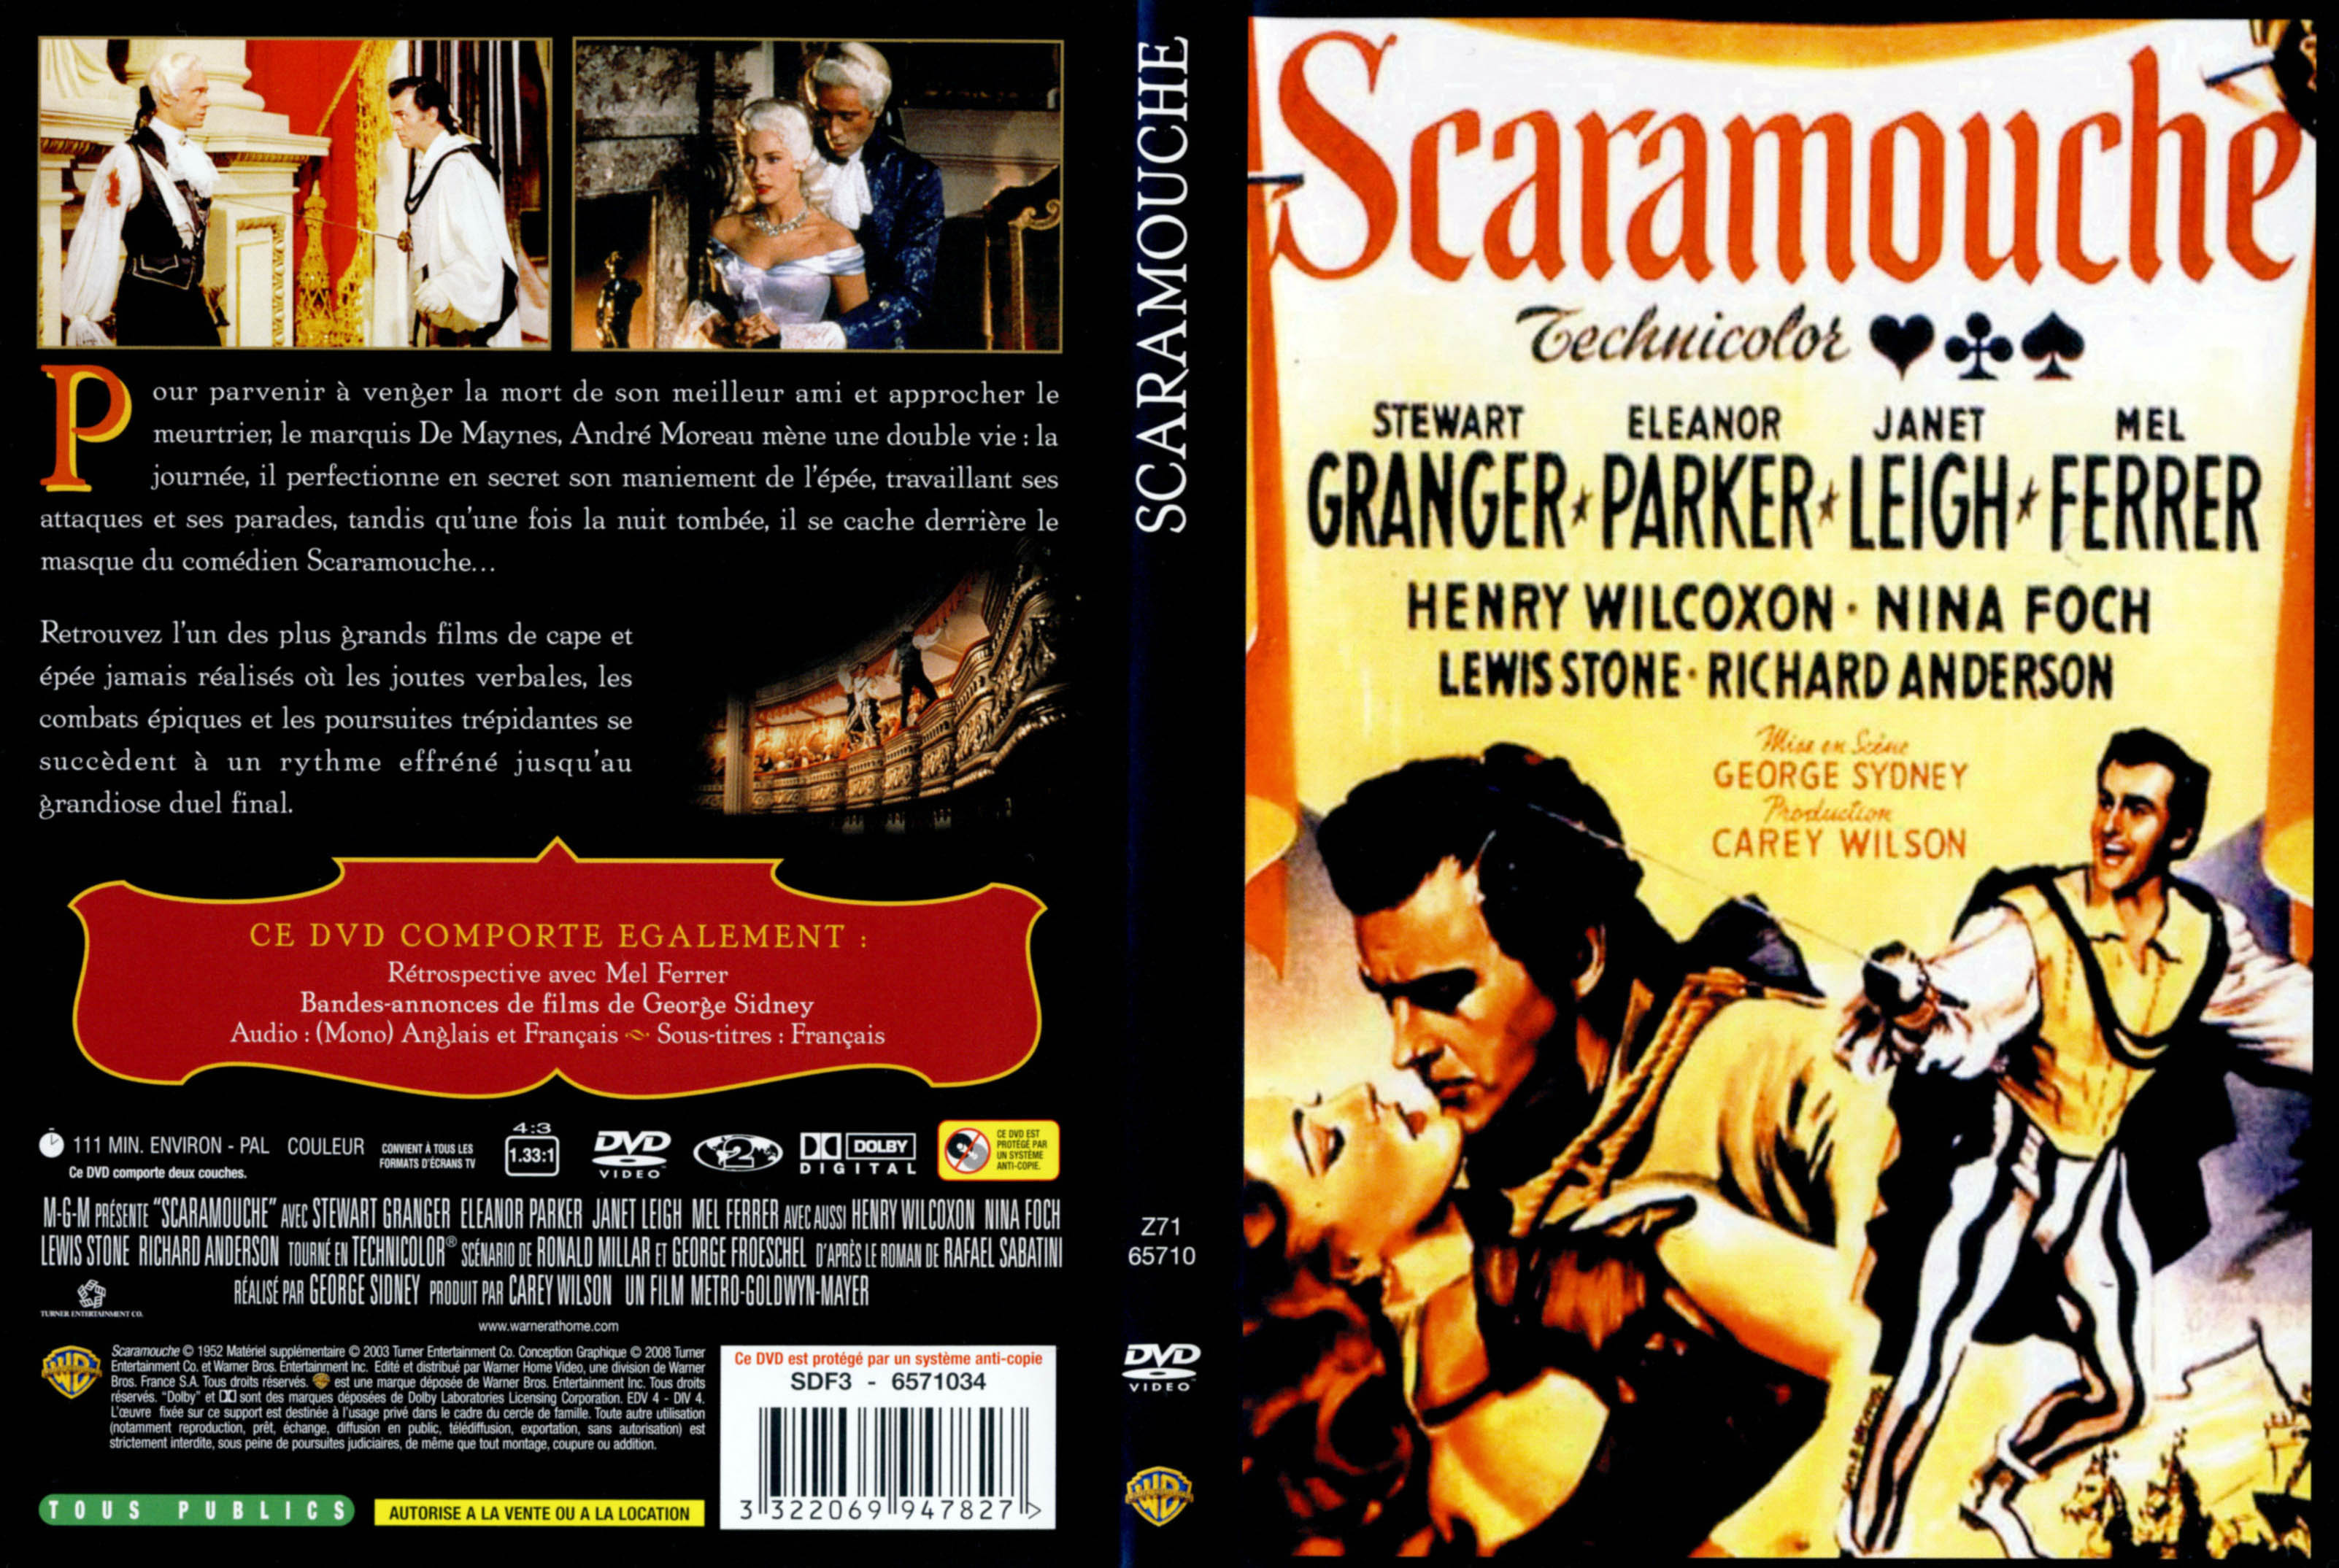 Jaquette DVD Scaramouche (Stewart Granger) v2